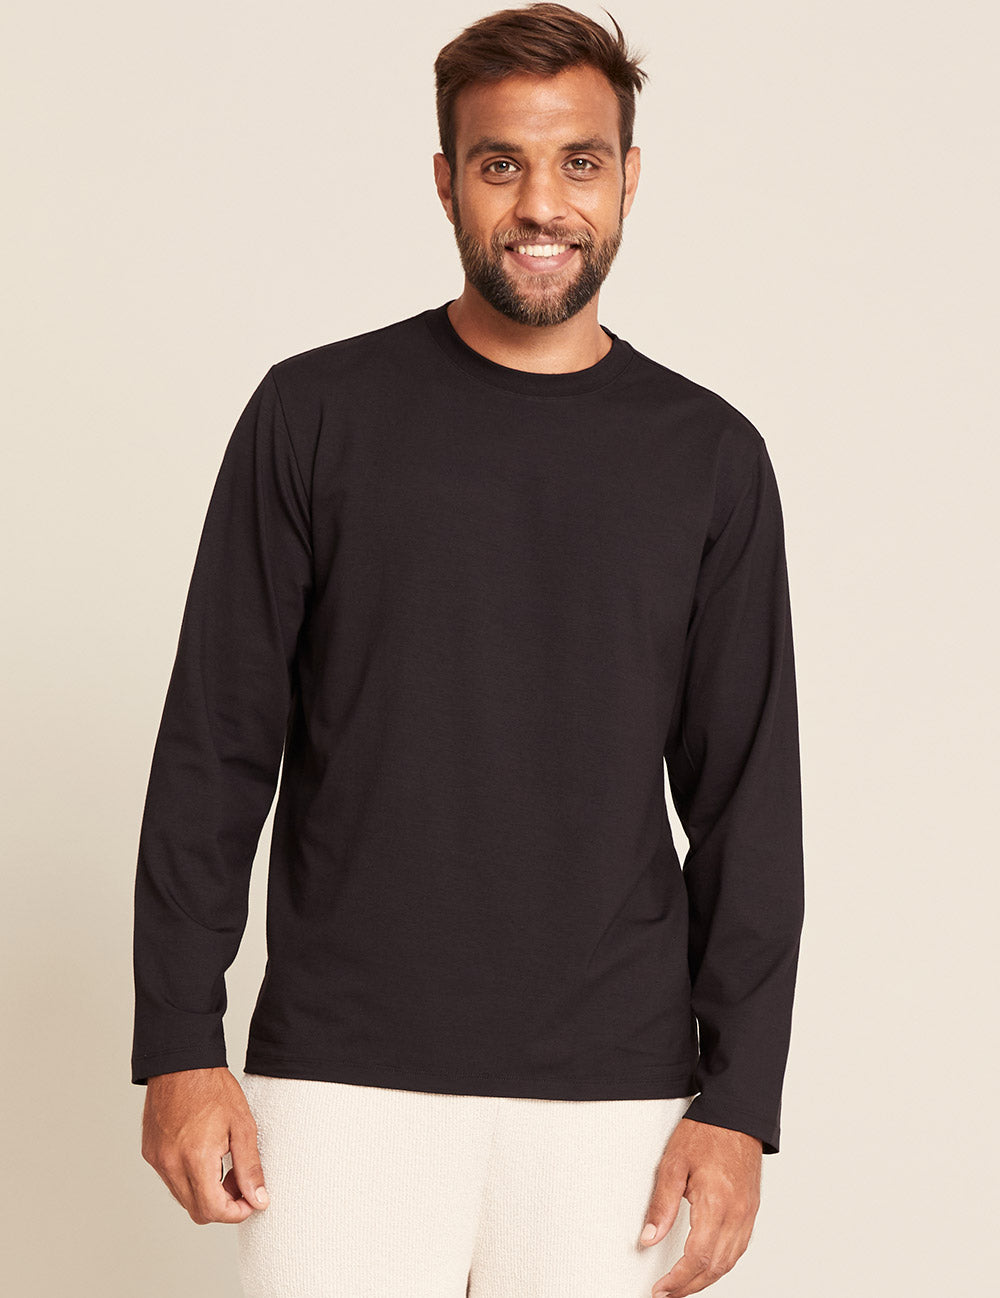 Men_s-Classic-Long-Sleeve-T-Shirt-black-front-2.jpg